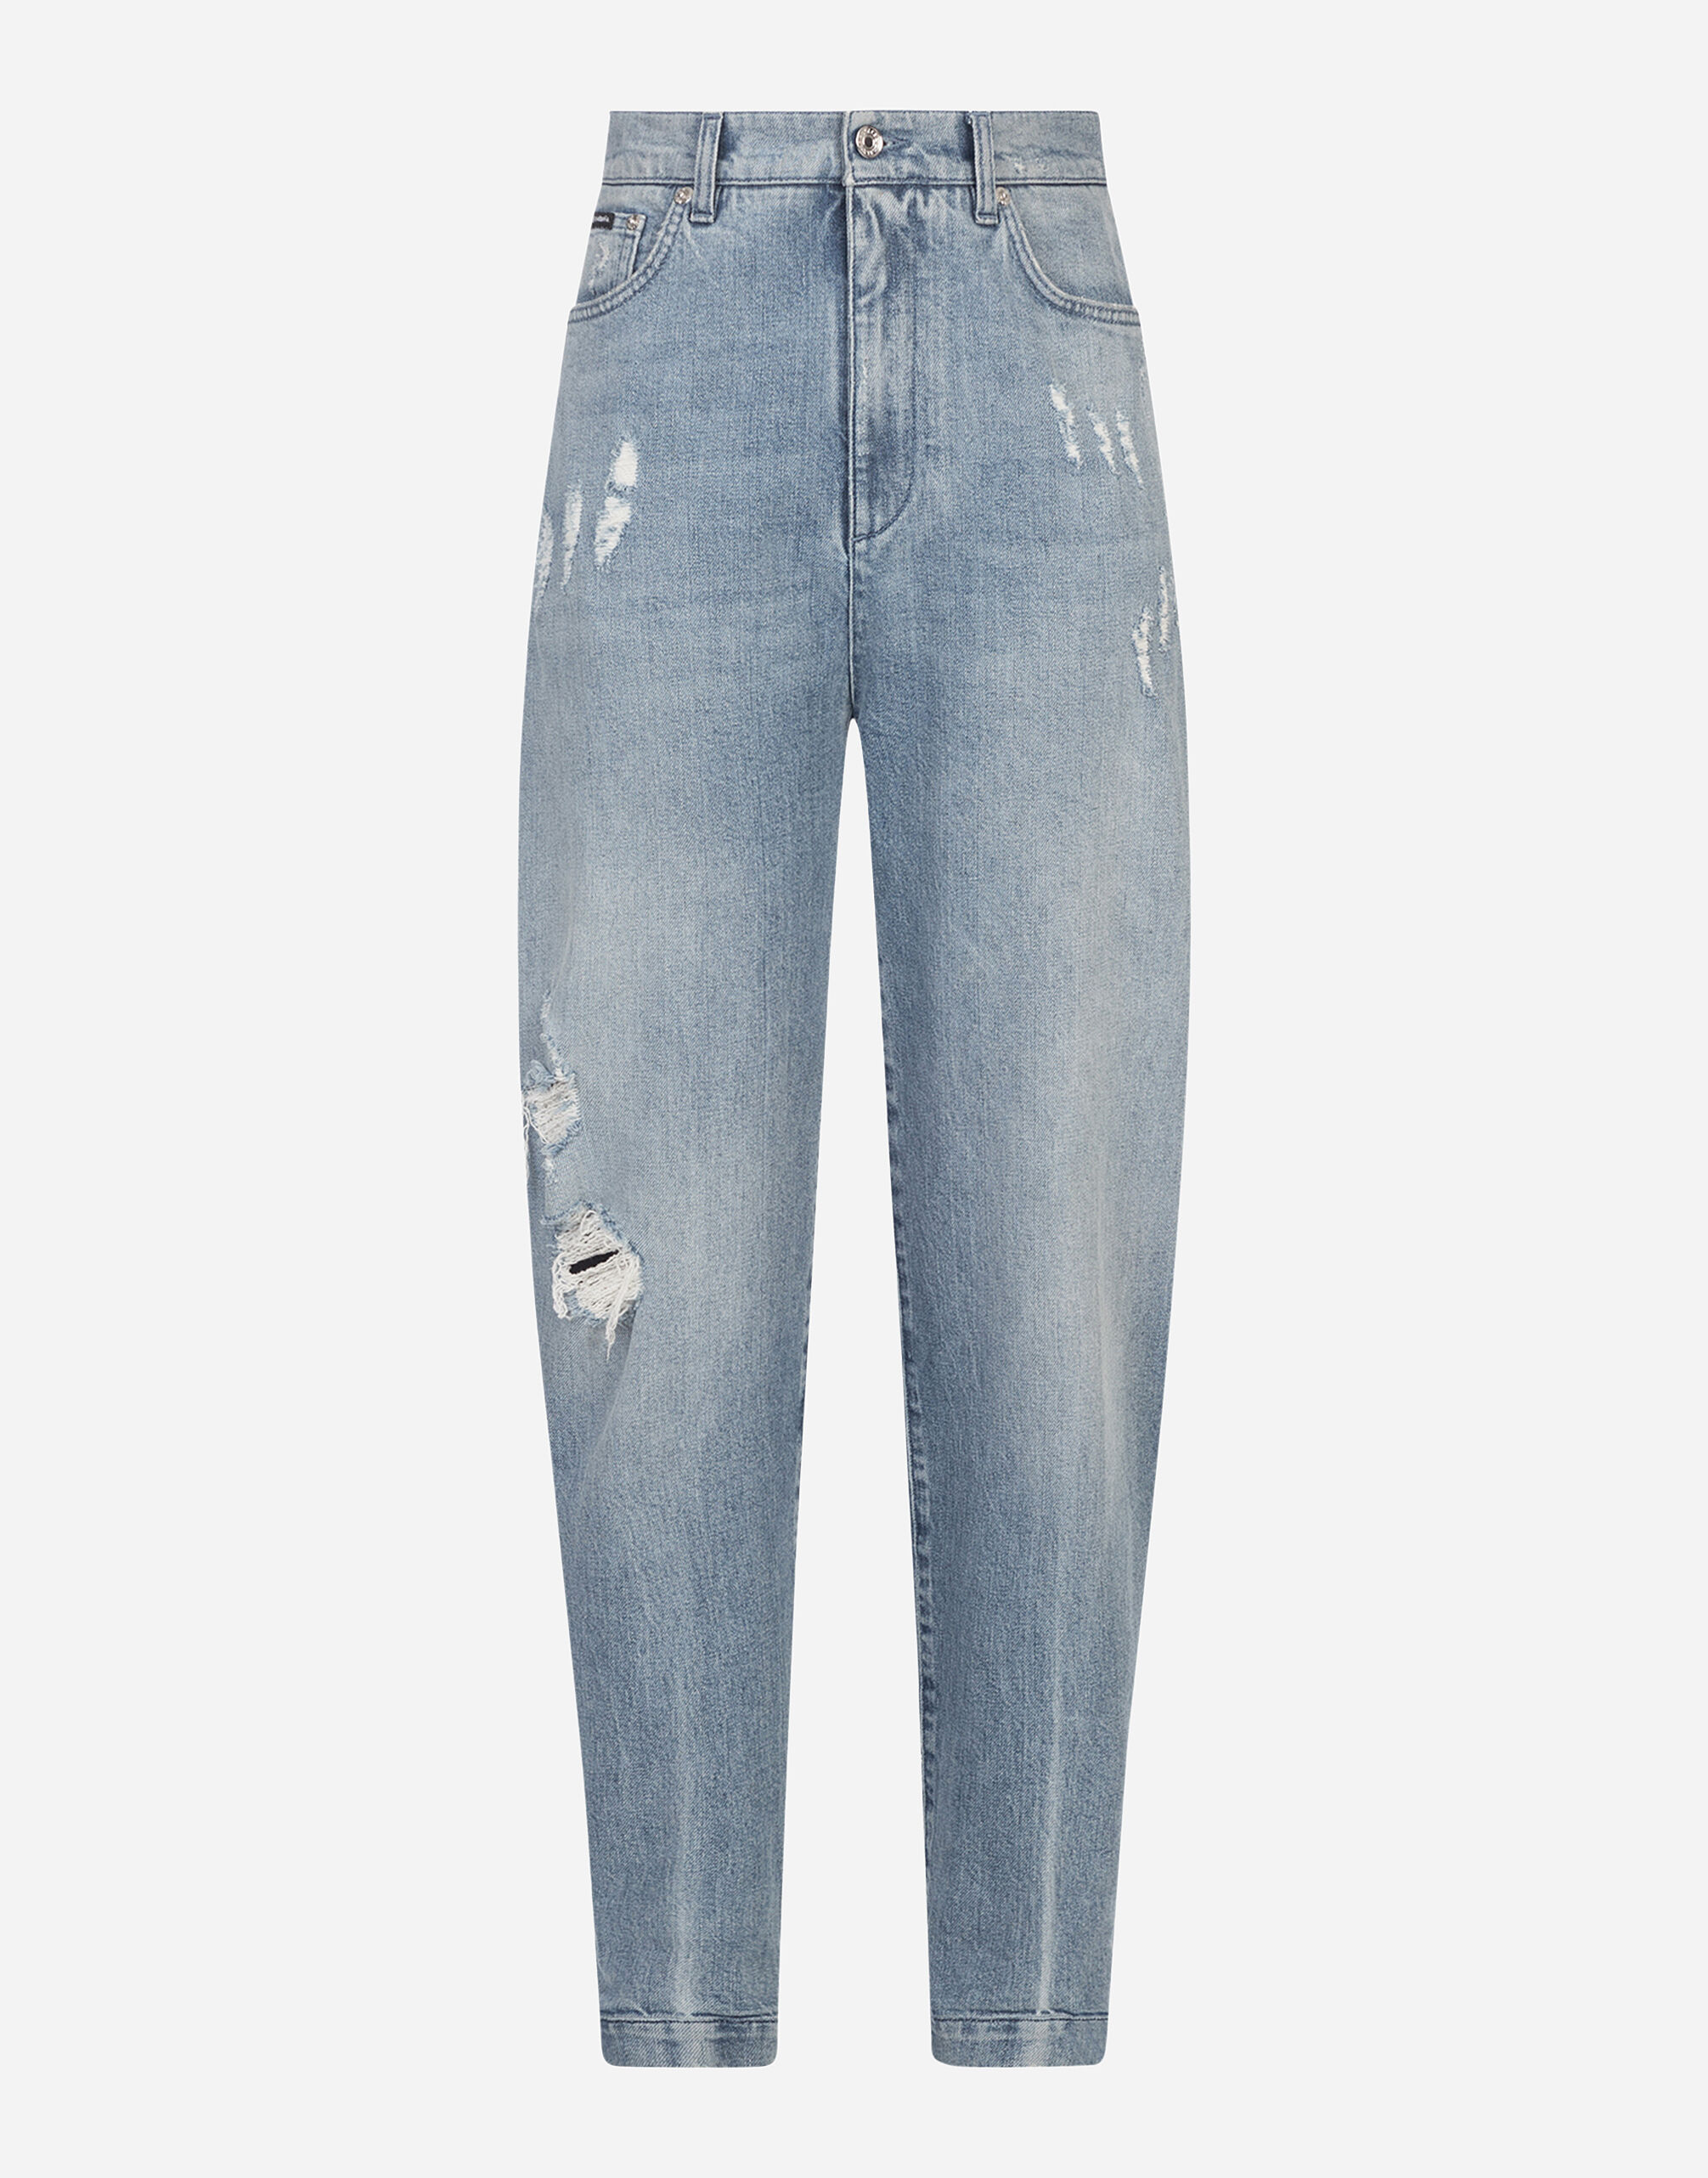 Dolce&Gabbana Boyfriend jeans in light blue denim with rips Multicolor FH603AFHMT7